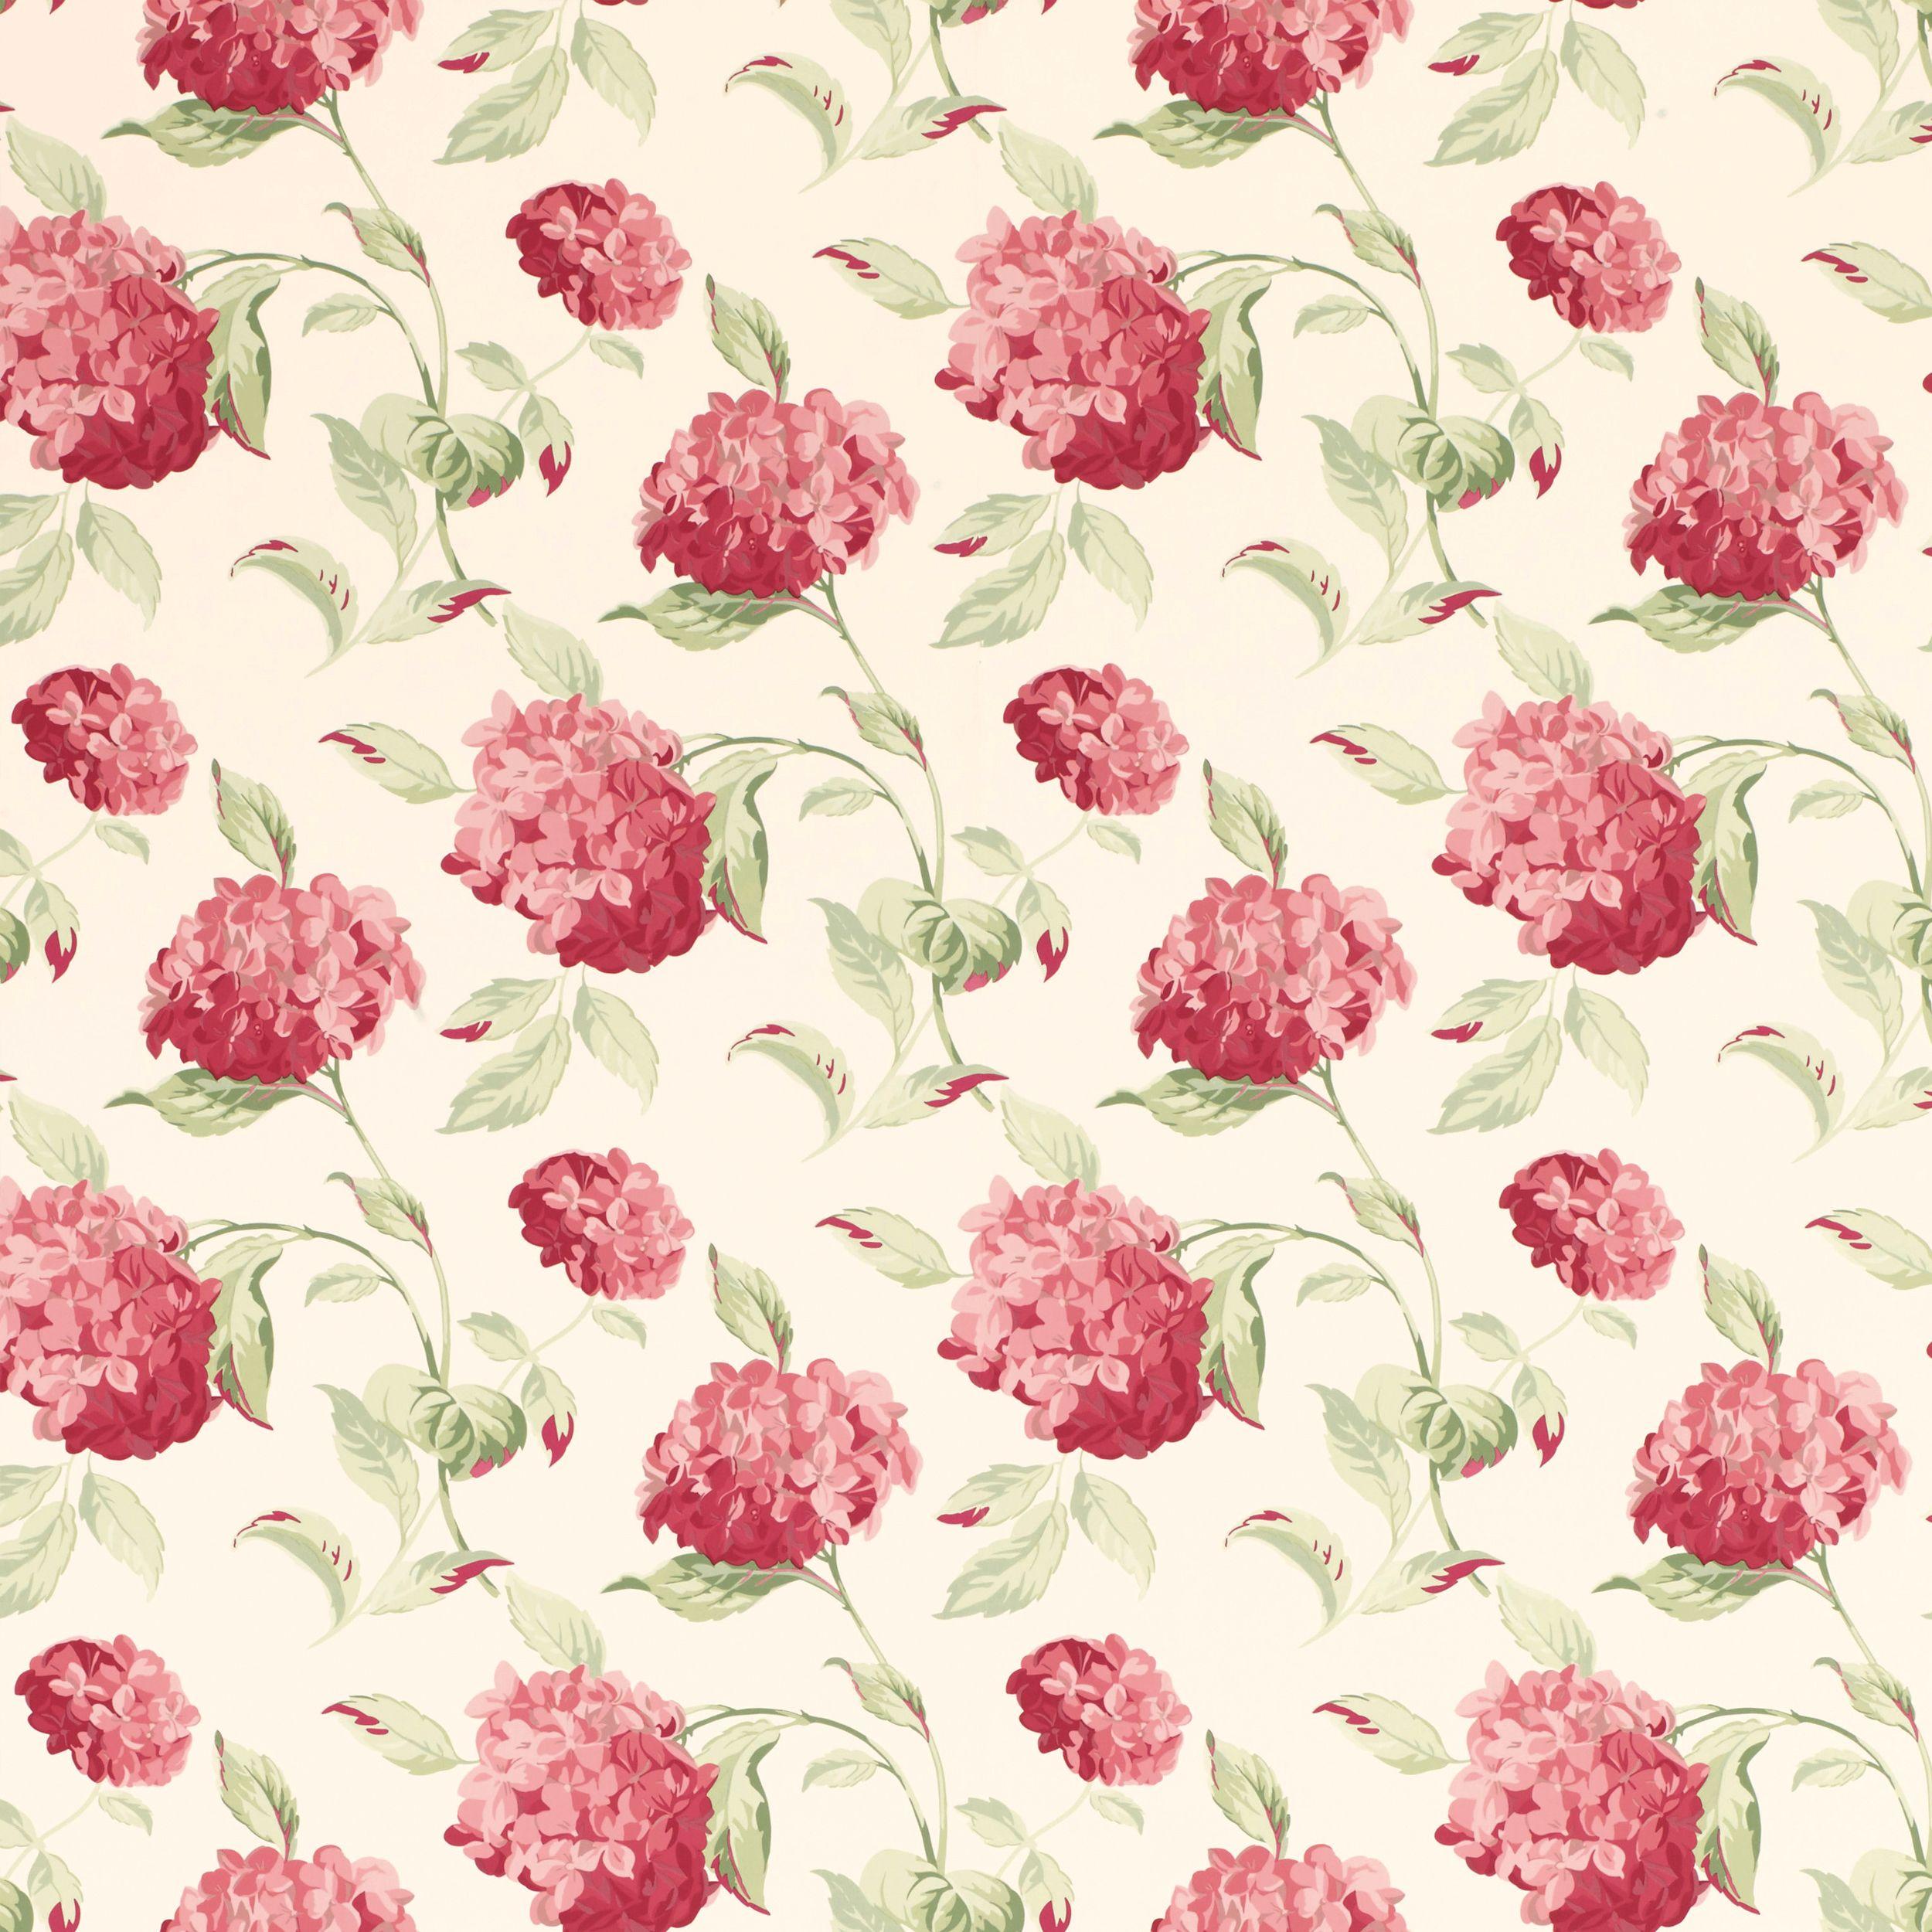 Hydrangea Cranberry Floral Wallpaper